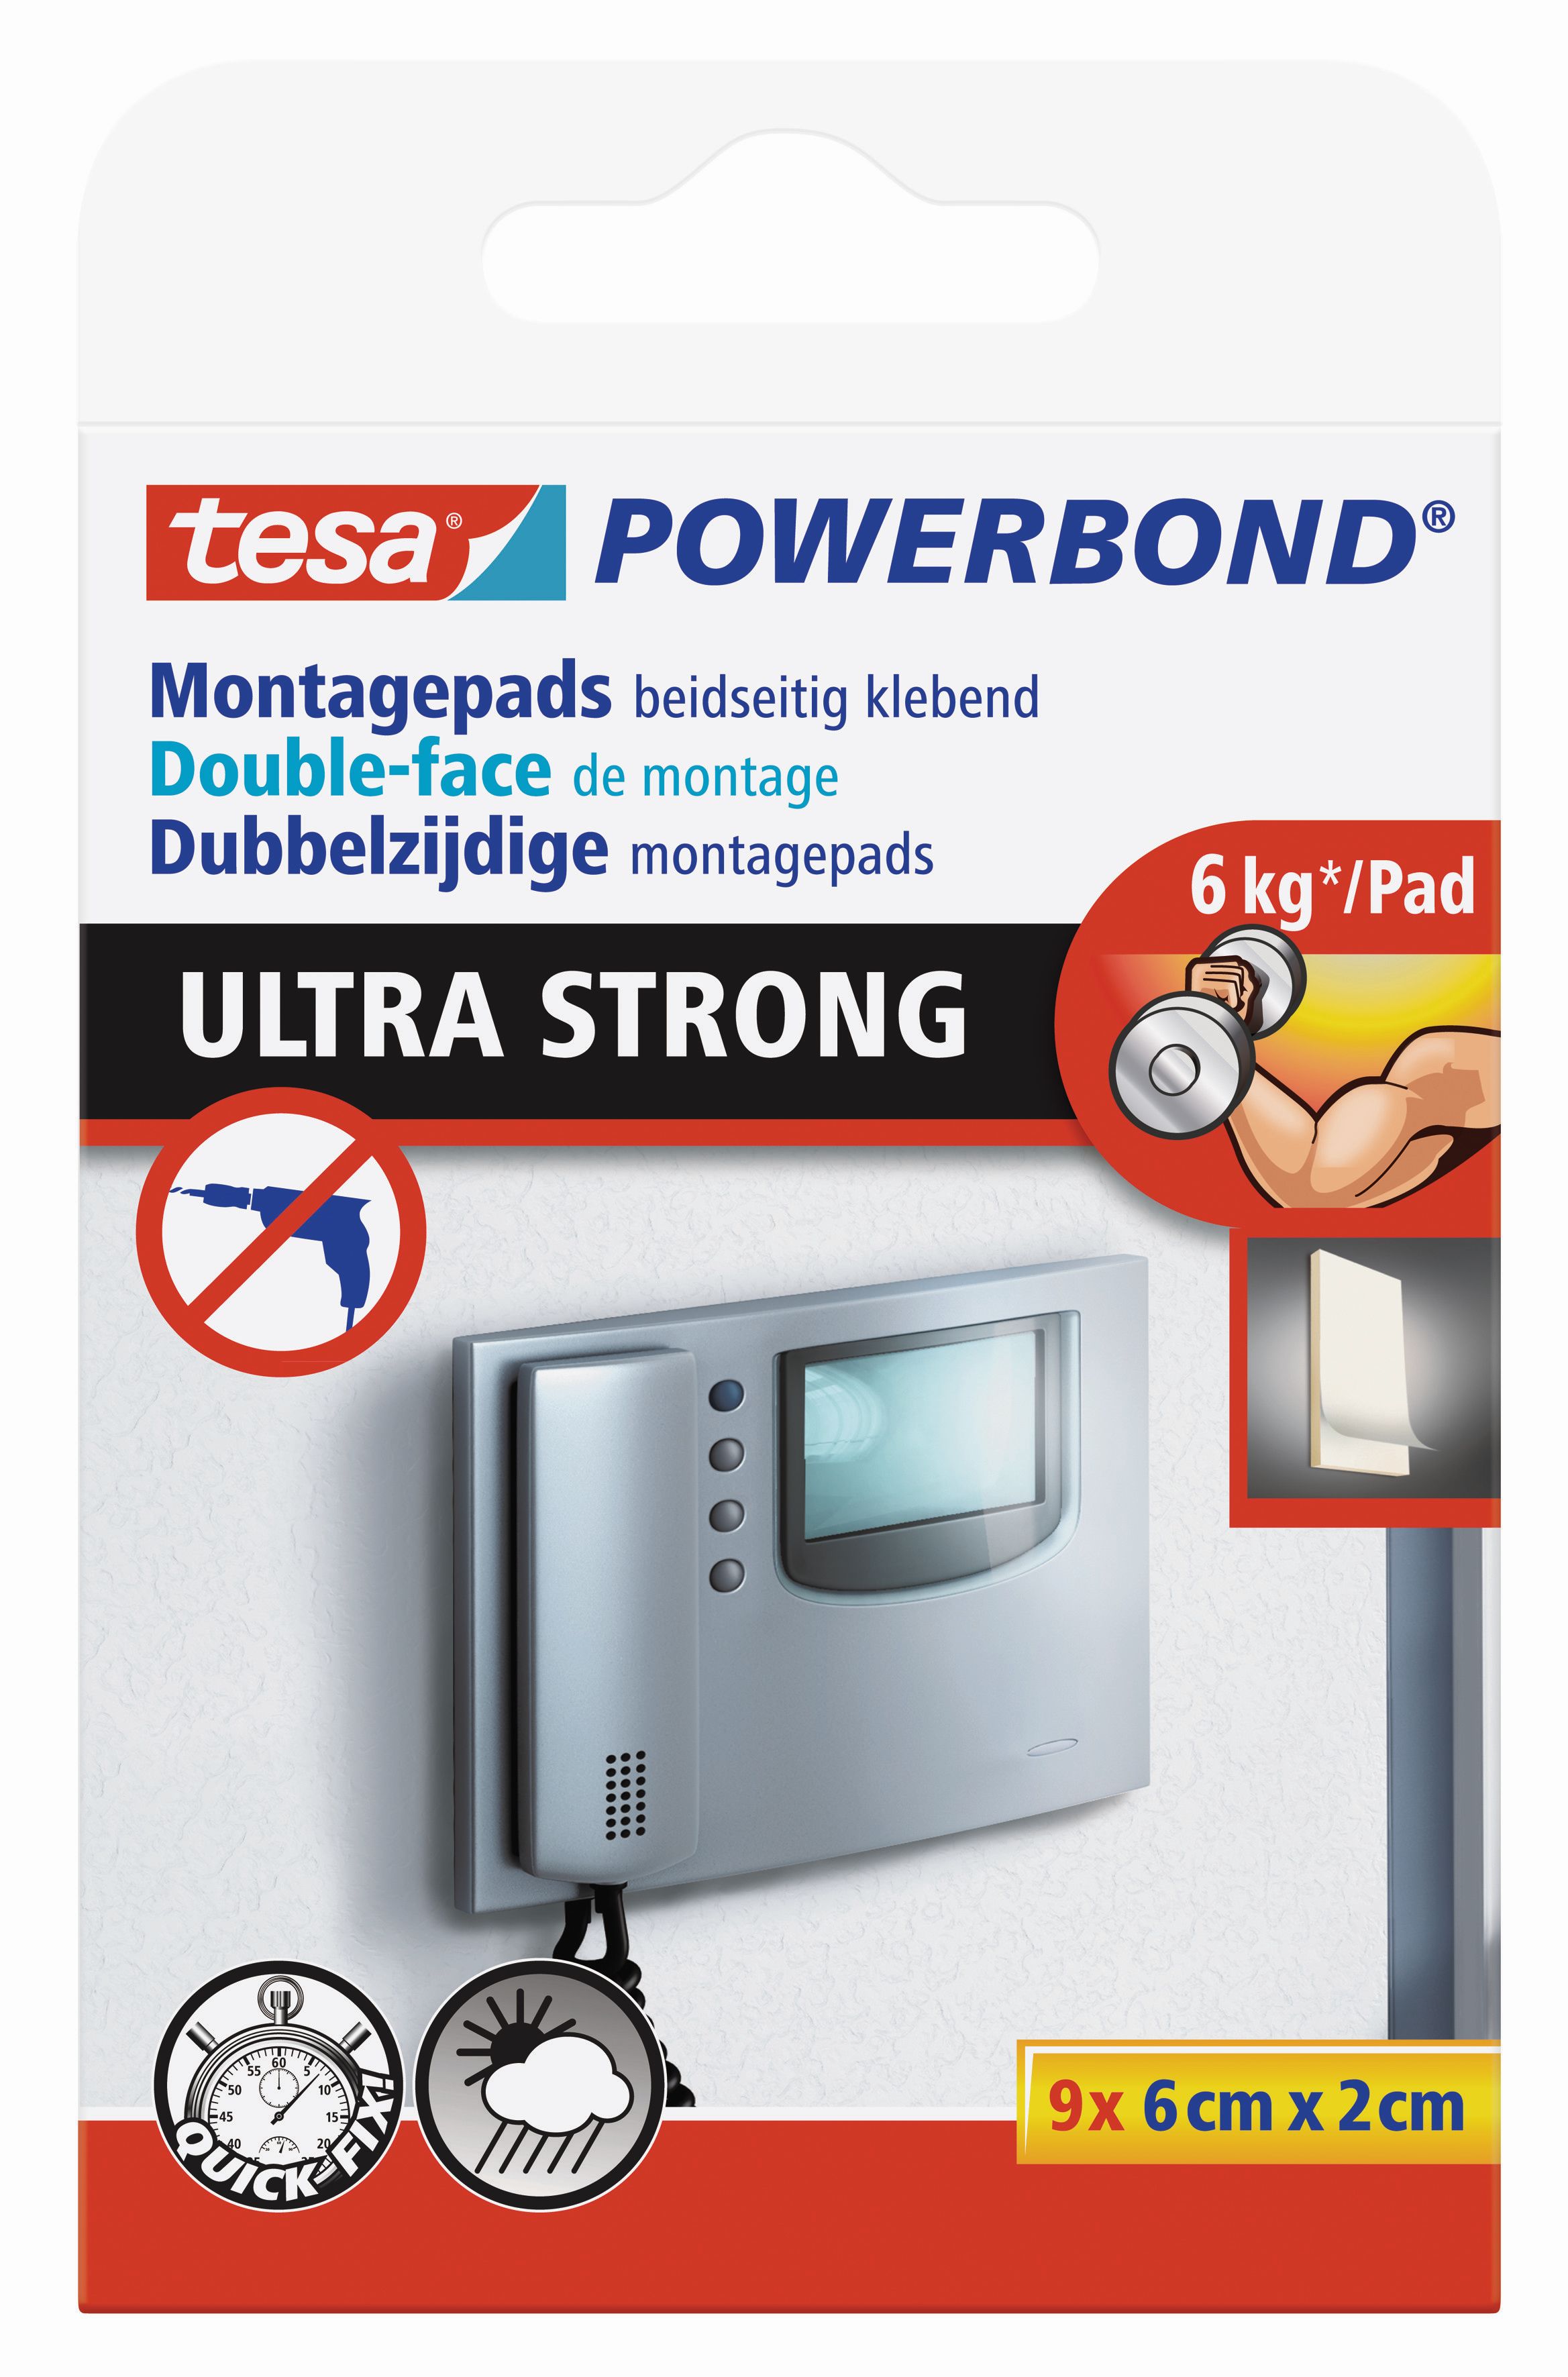 tesa doppelseitige Montagepads, Powerbond ULTRA STRONG (6 kg)